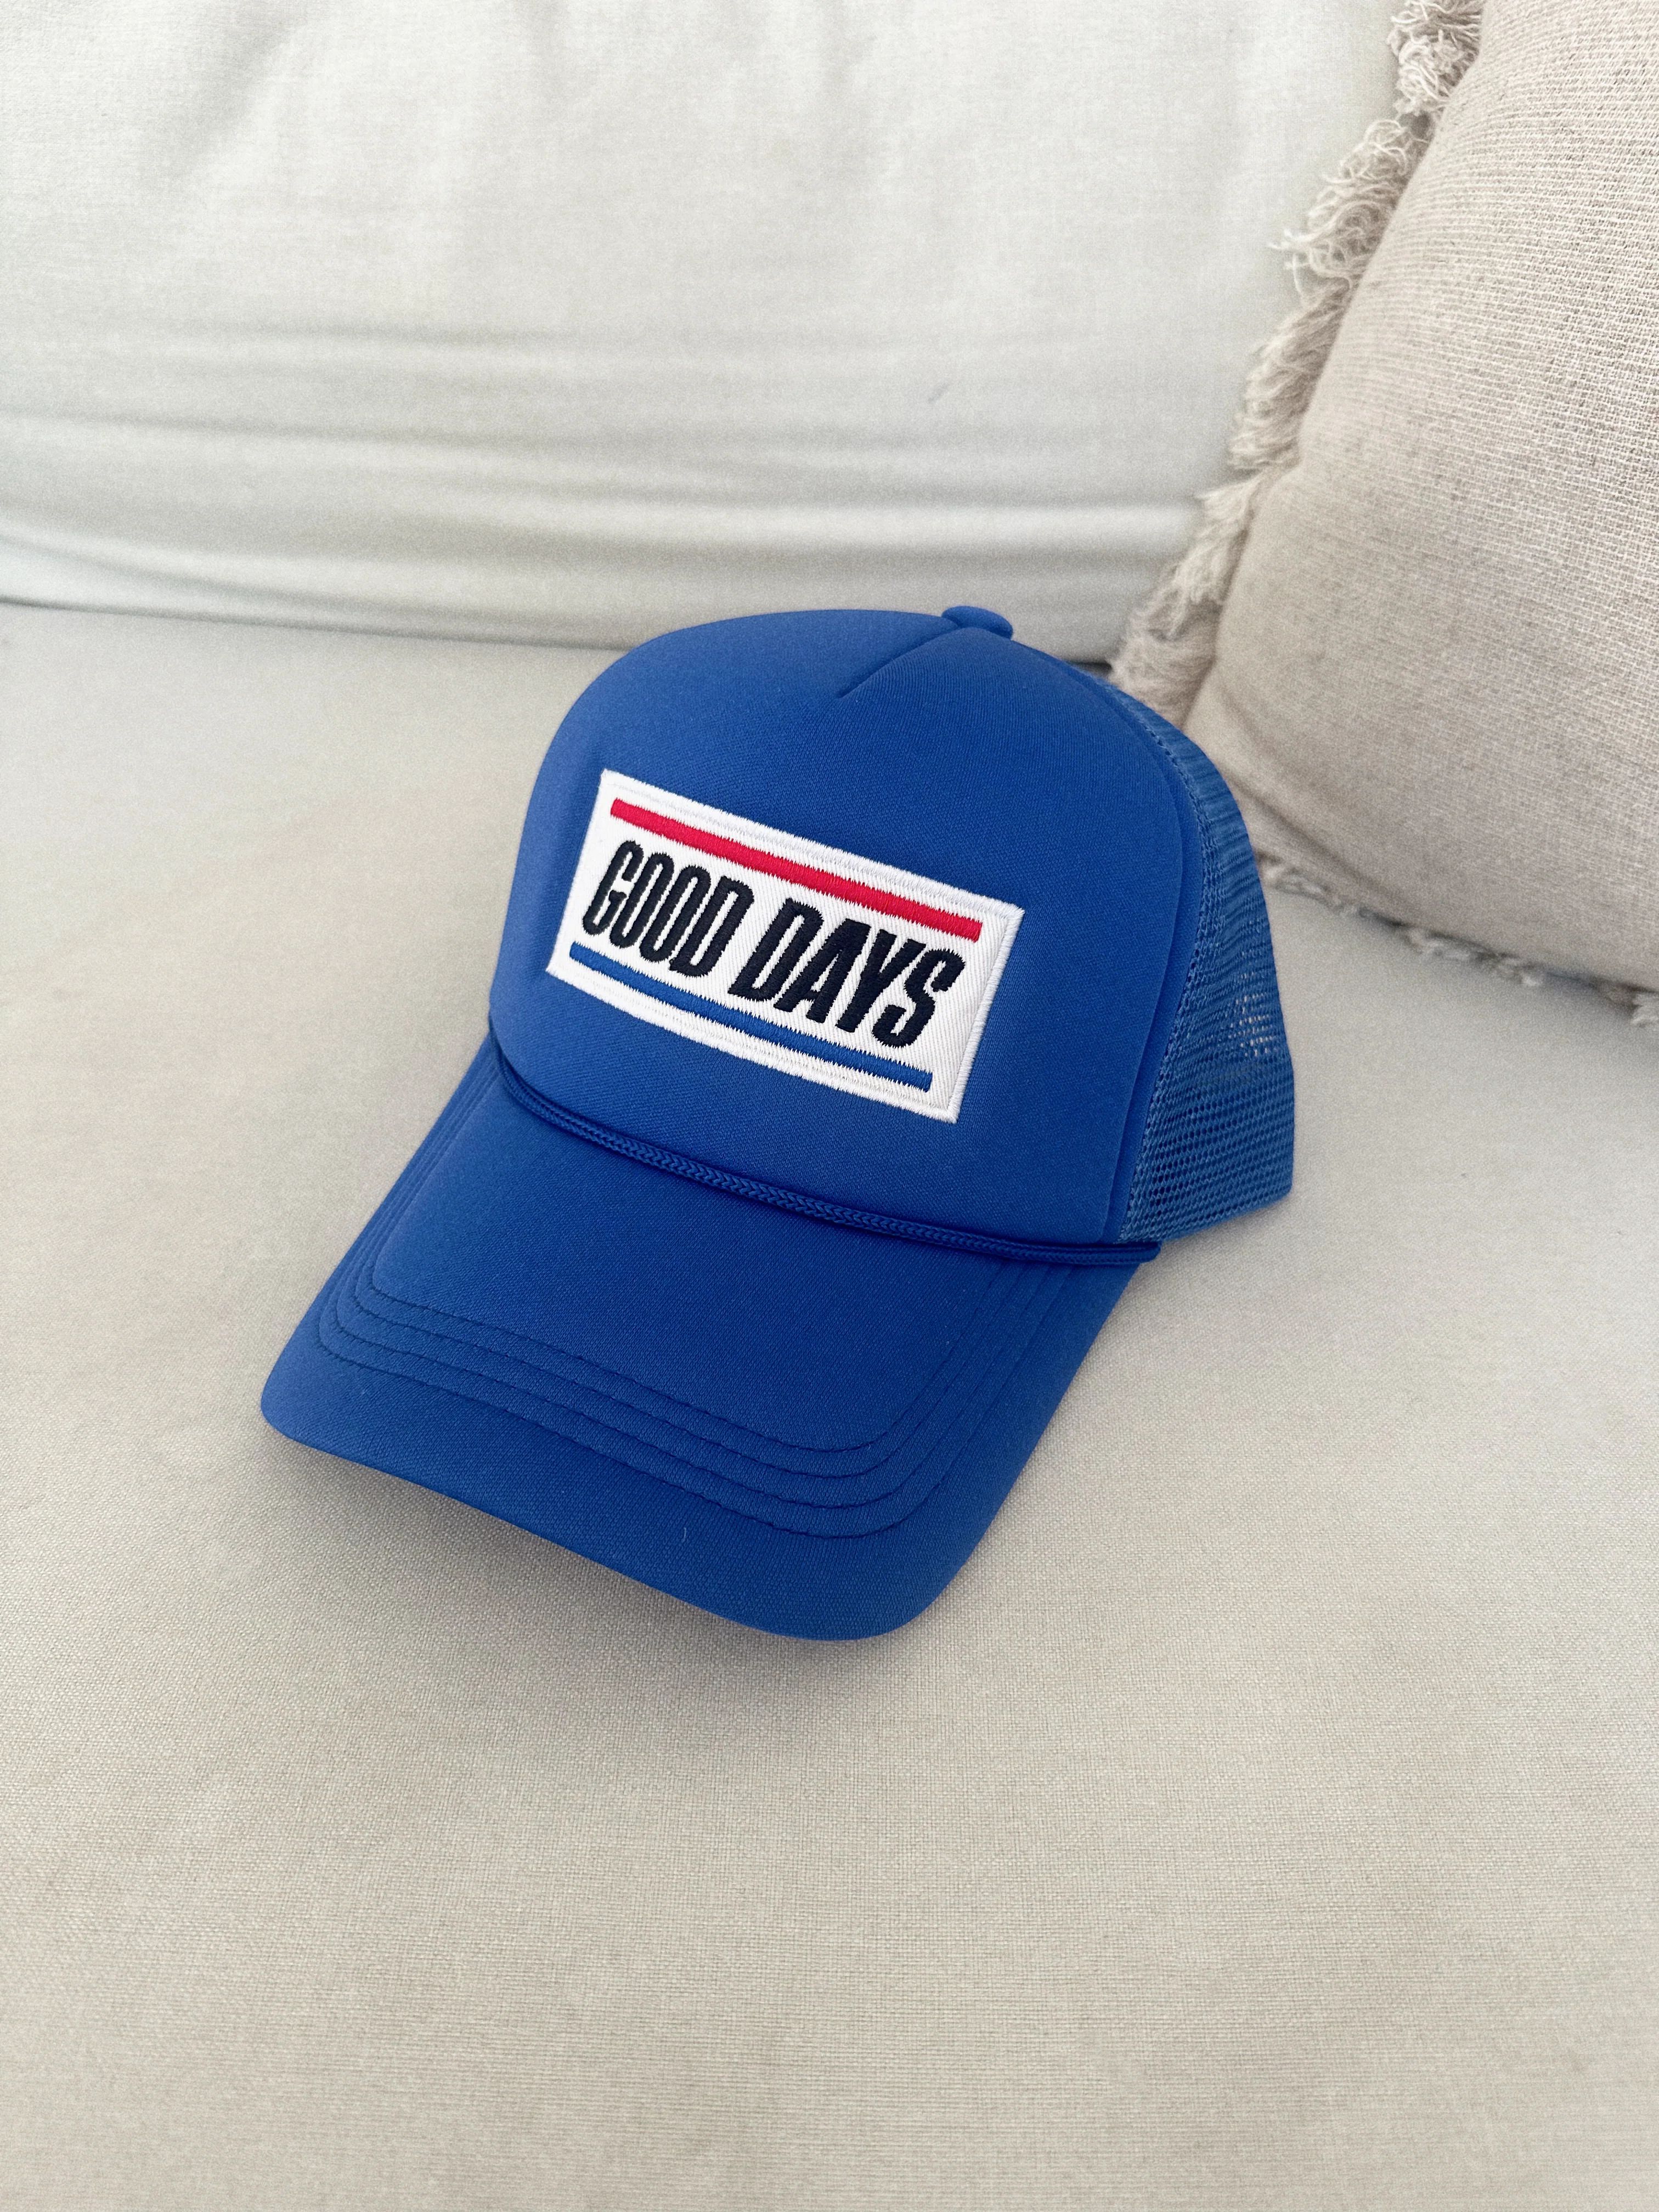 Good Days Trucker Hat- Racing Blue | Shop Kristin Jones